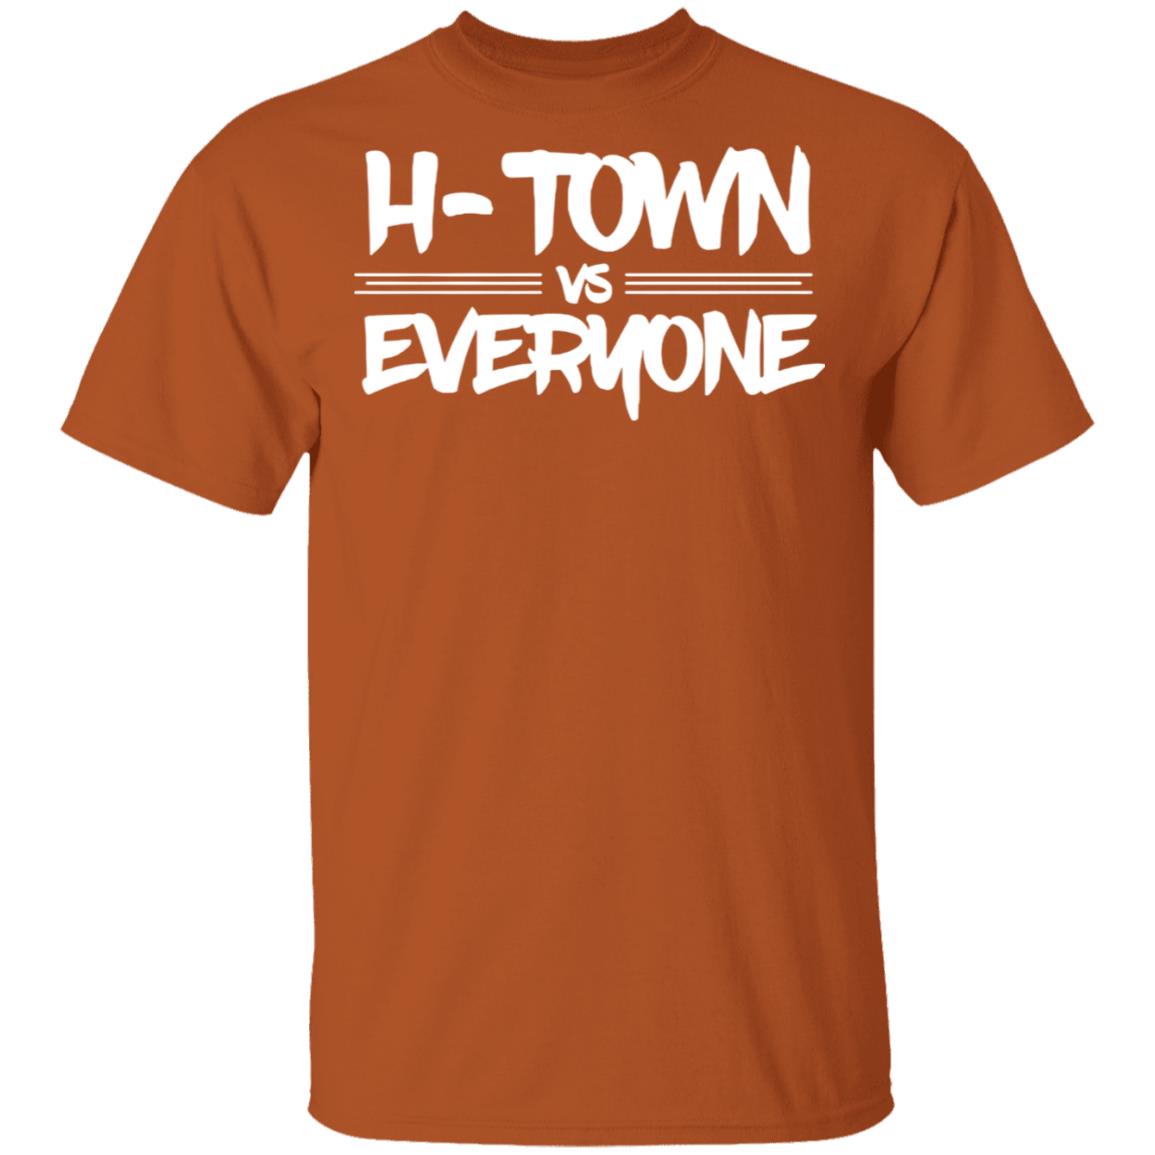 H-Town Vs Everyone Shirt, T-Shirt, Hoodie, Tank Top, Sweatshirt